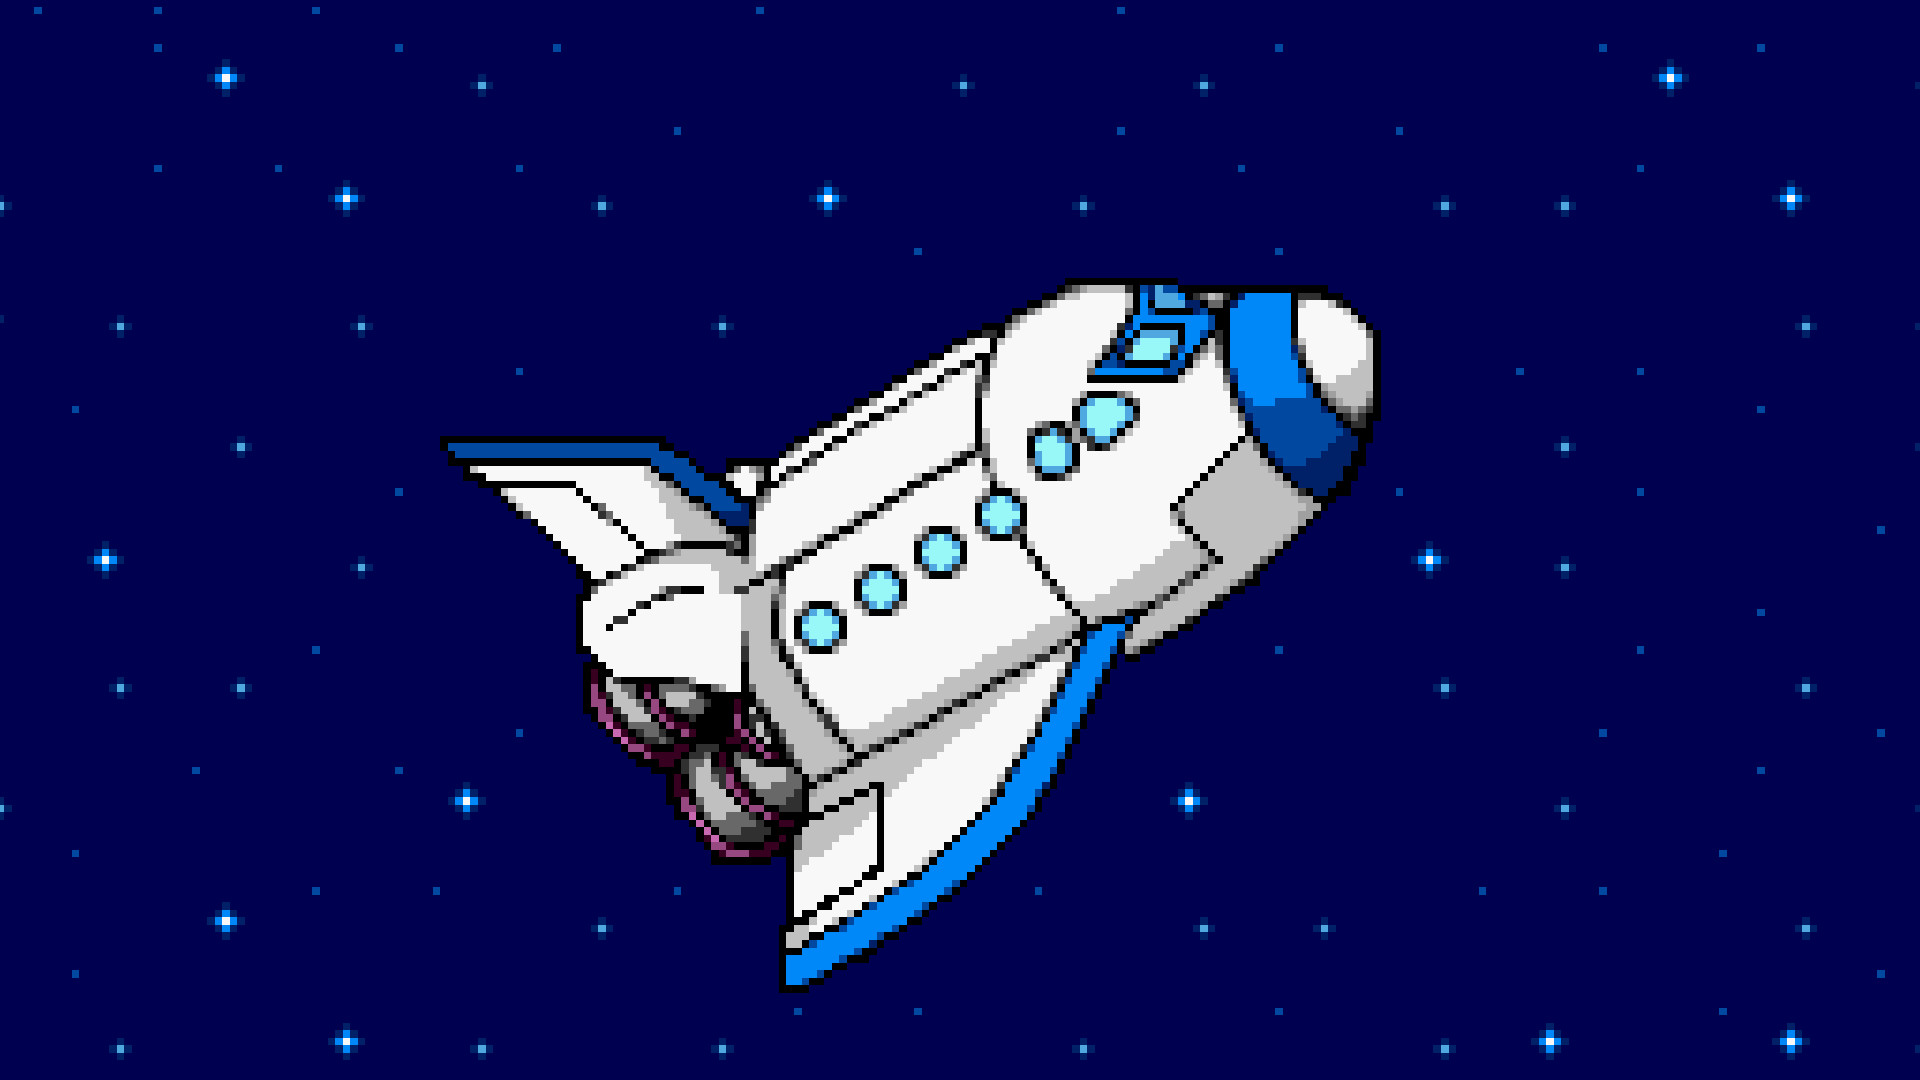 1920x1080 General  digital art minimalism pixels pixel art universe space  stars spaceship rocket blue background bomberman